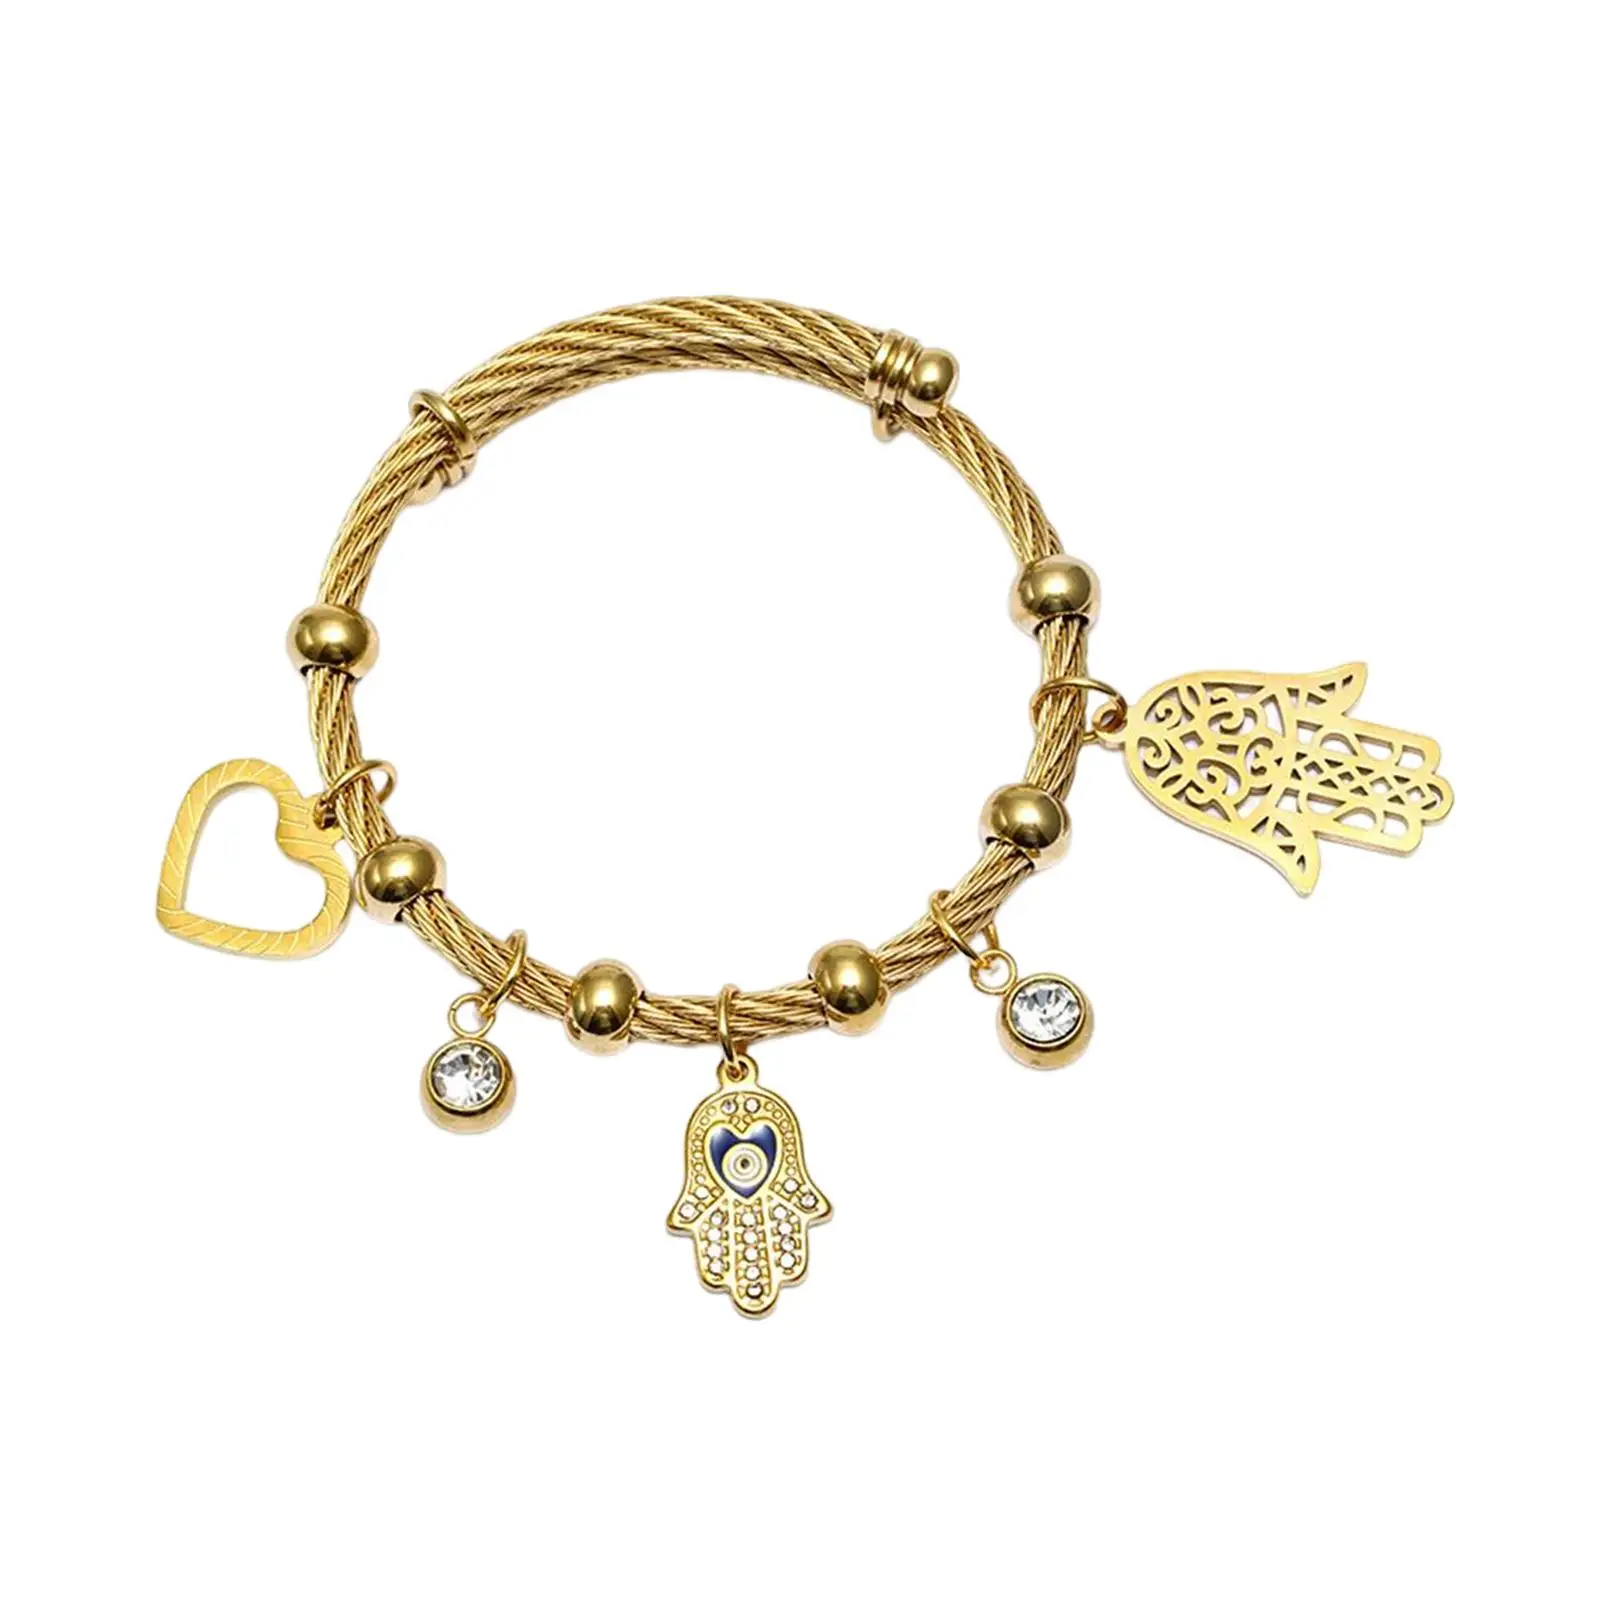 Chic Hamsa Hand of Fatima Bracelet Adjustable Bangle Love Heart Charm Pendant Bracelet for Women Mom Teen Birthday Gift Jewelry